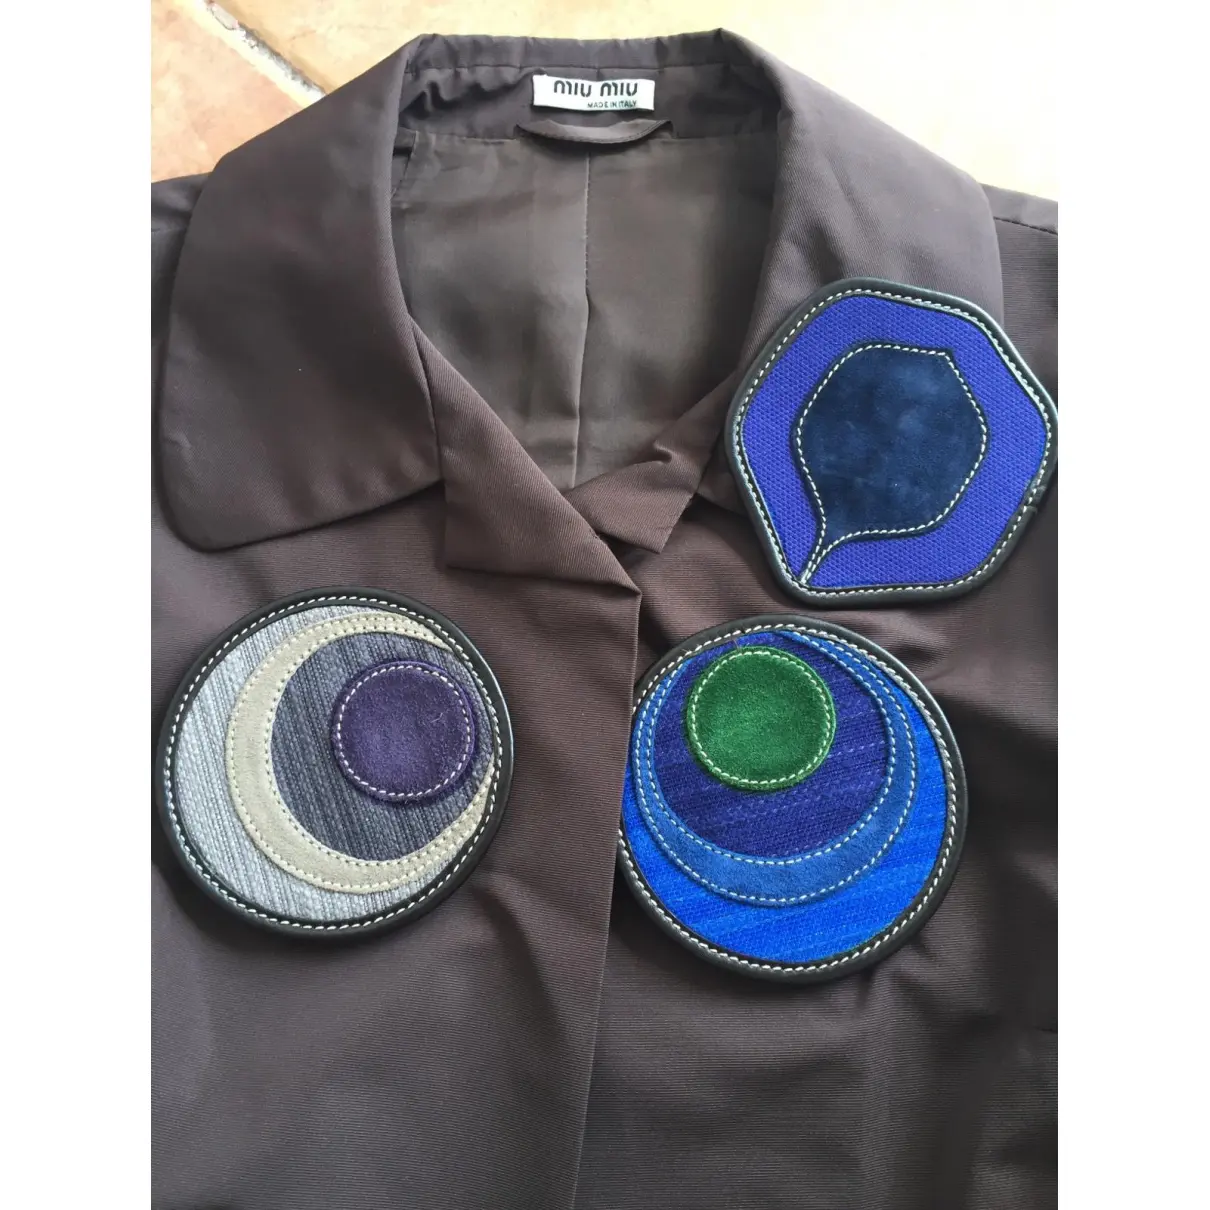 Miu Miu Jacket for sale